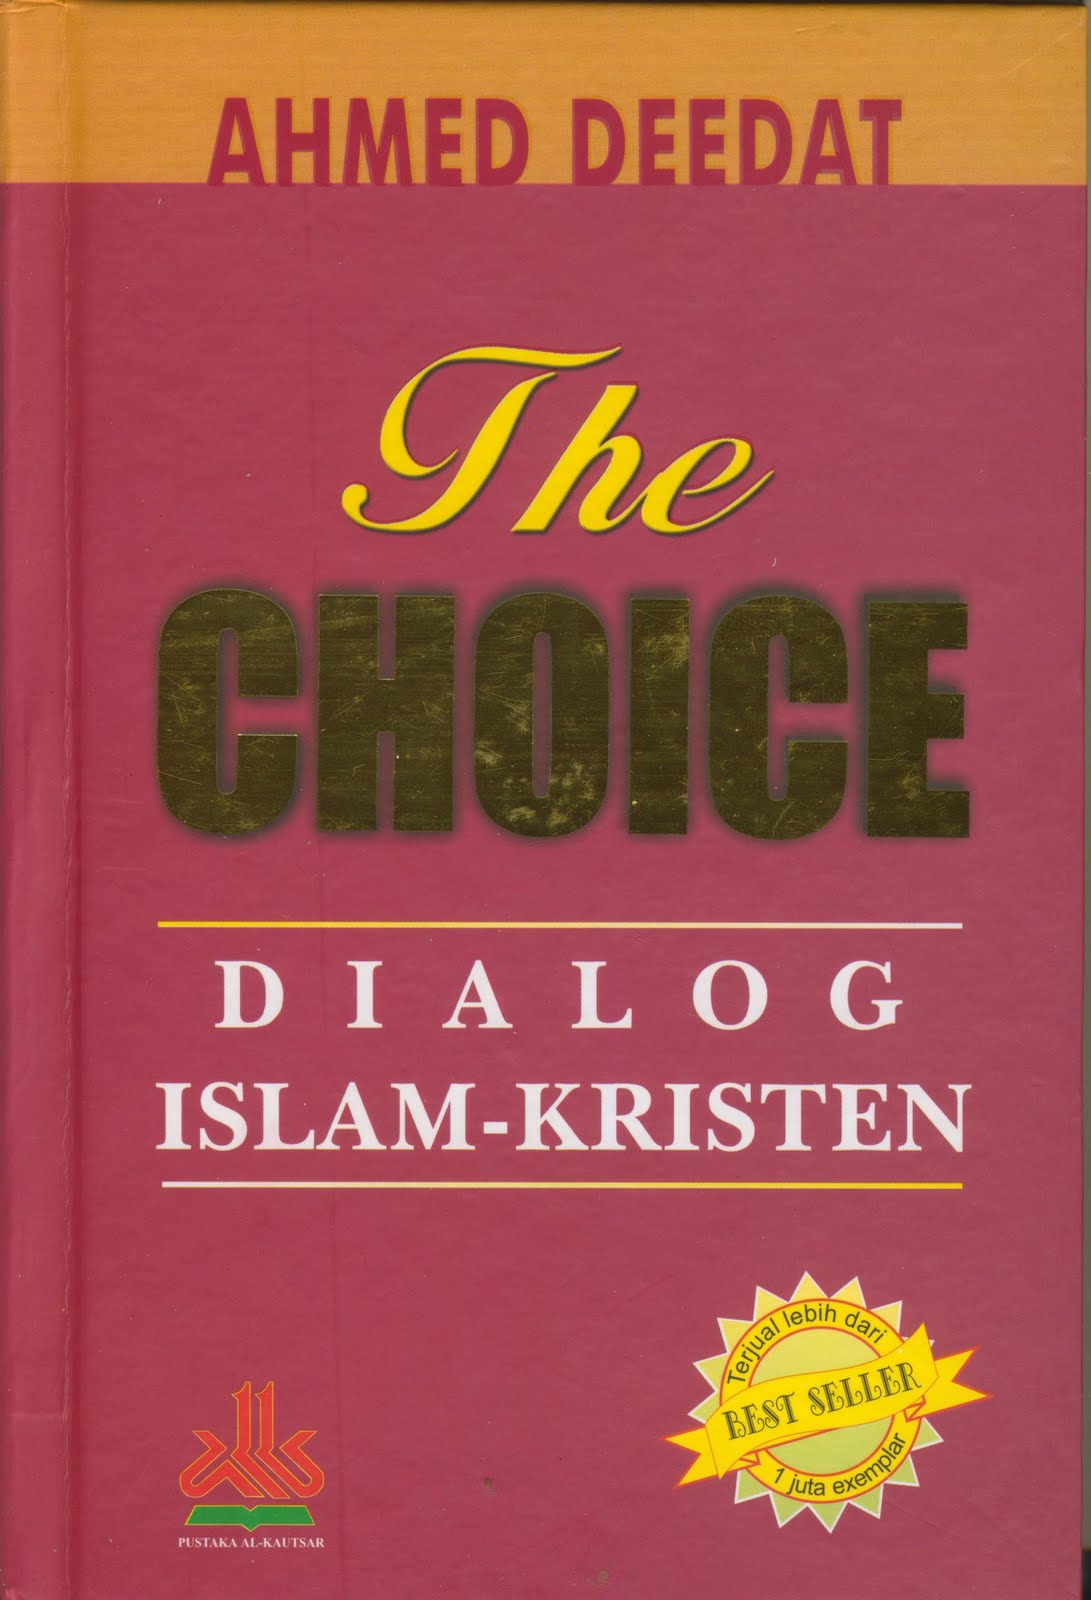 the choice ahmed deedat bahasa indonesia pdf 25